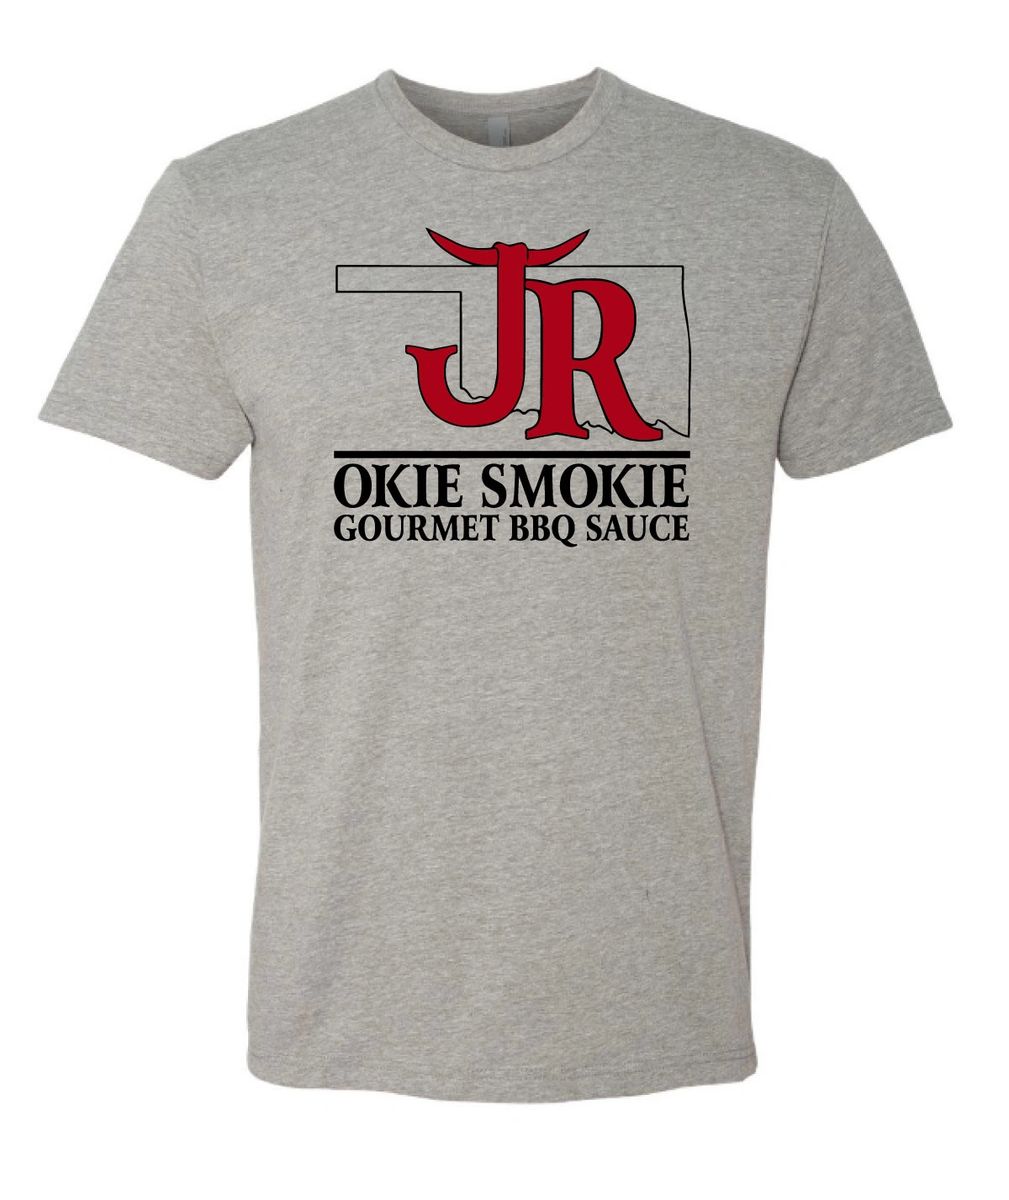 Grey T-Shirt - JR Okie Smokie Gourmet BBQ Sauce